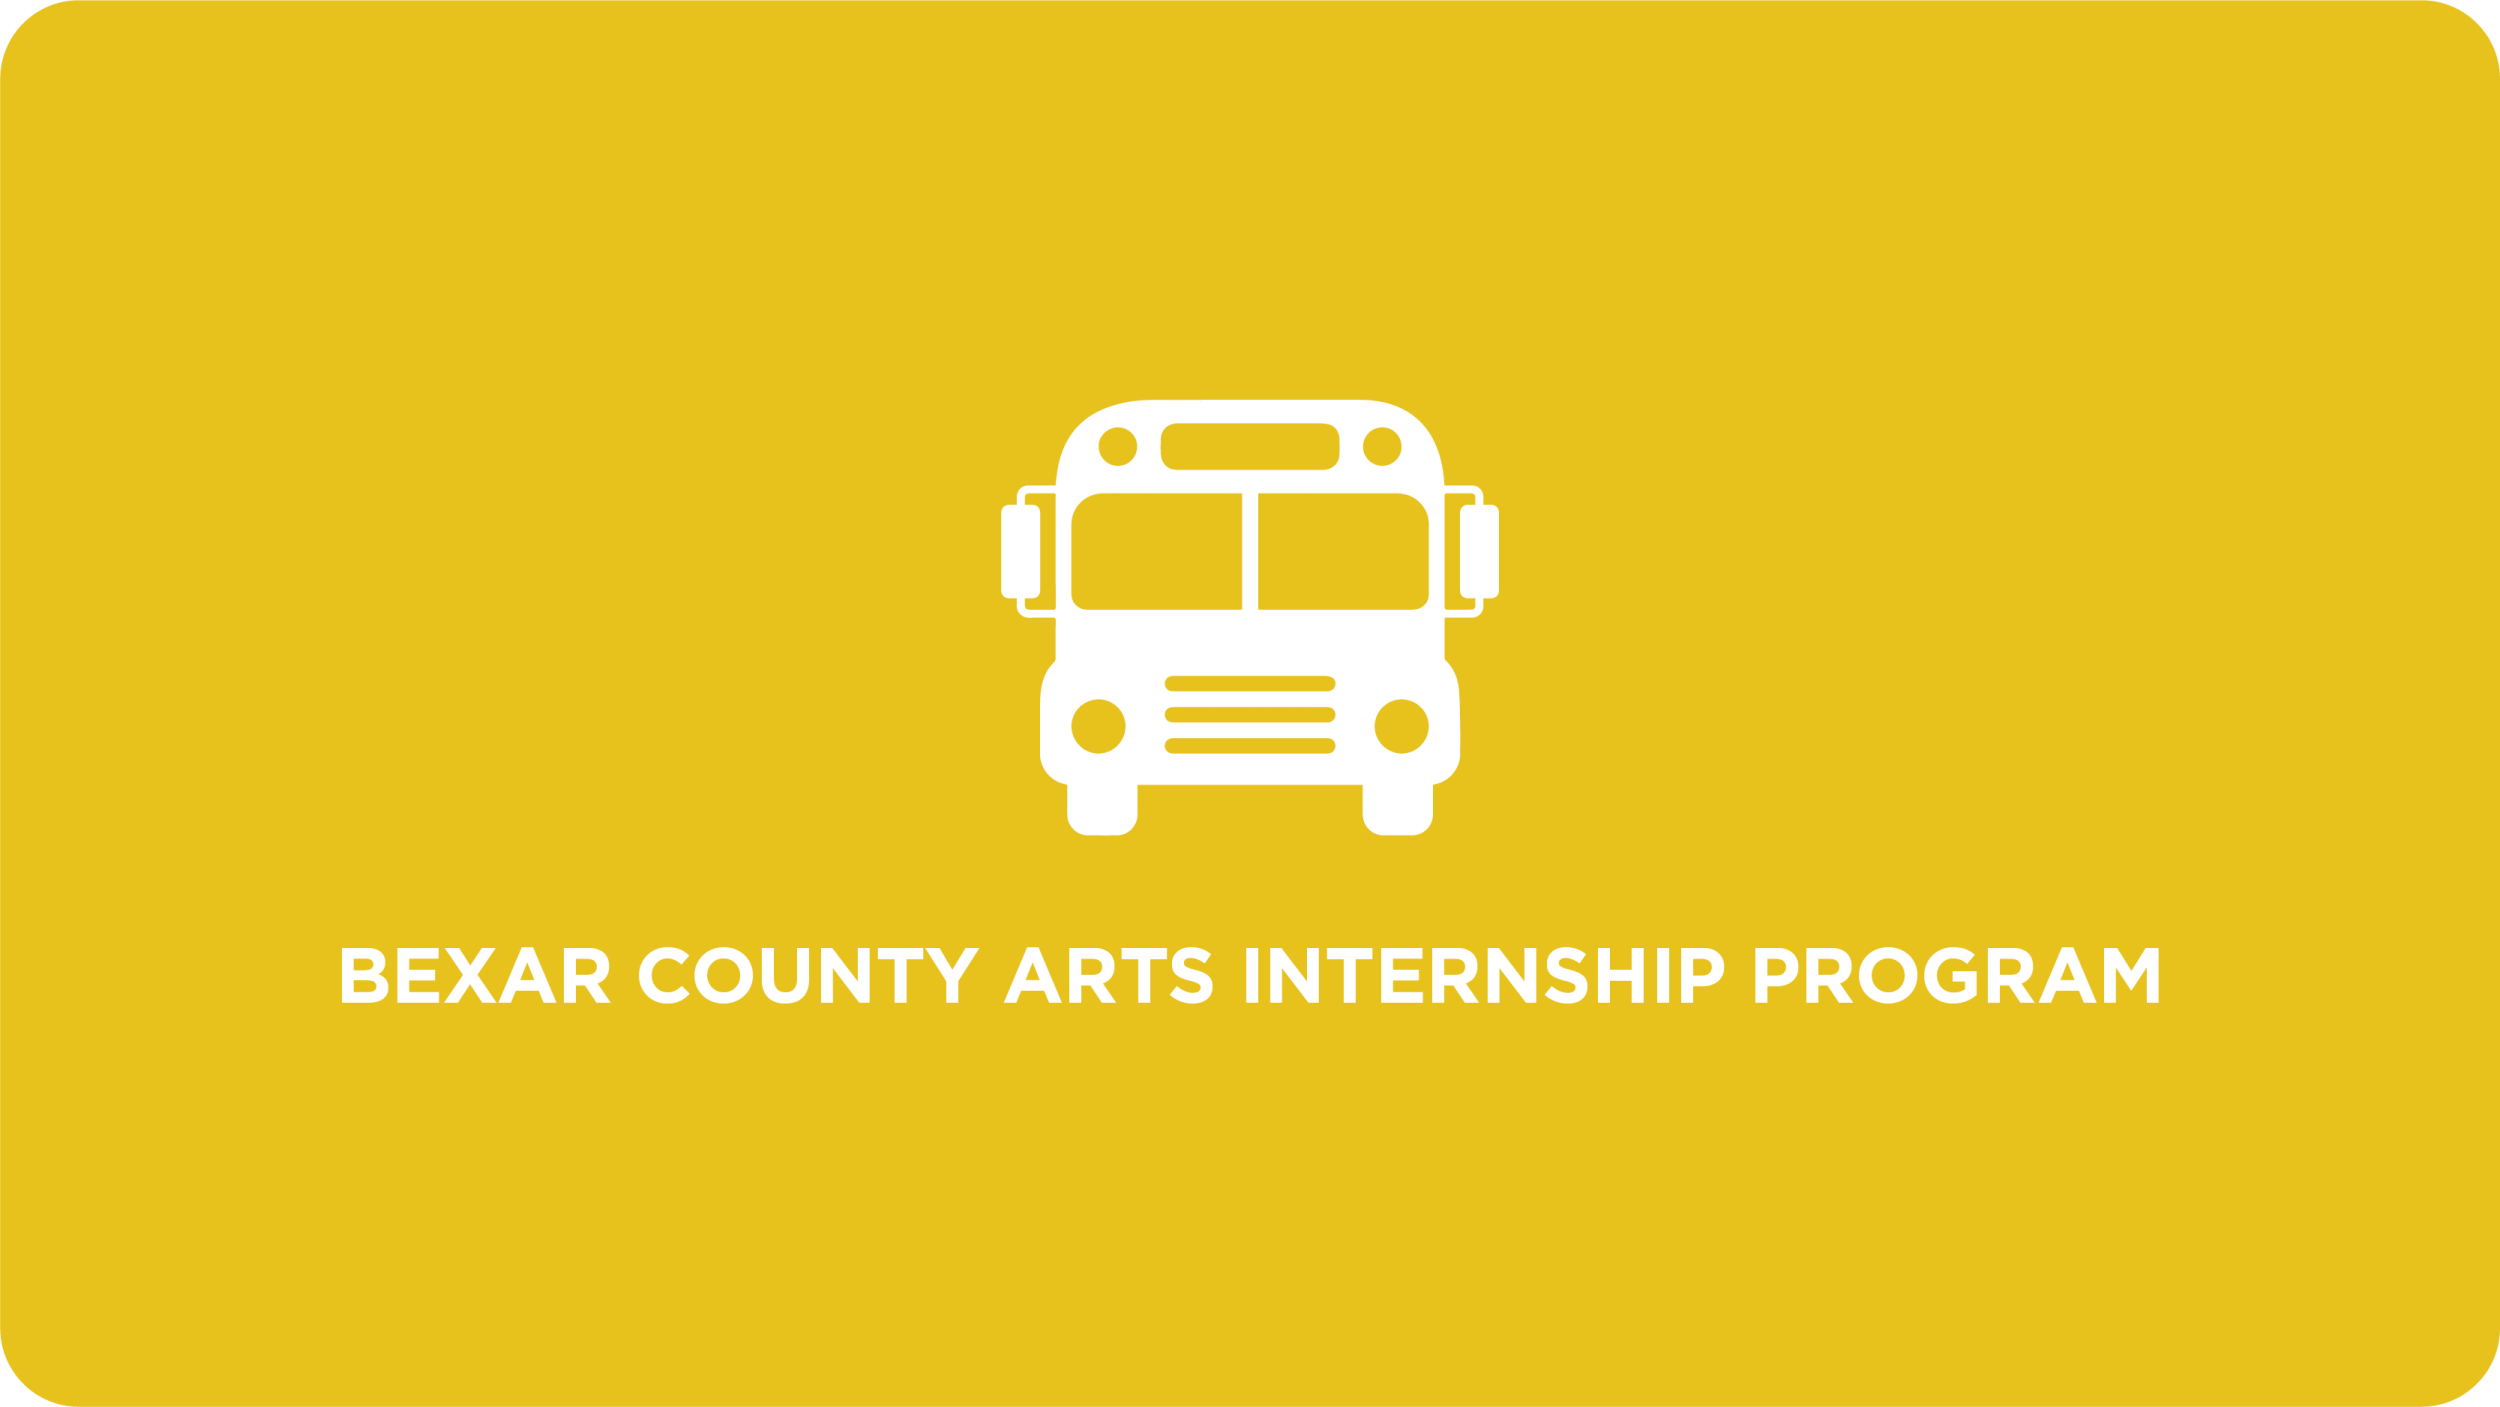 Bexar County Arts Internship Program